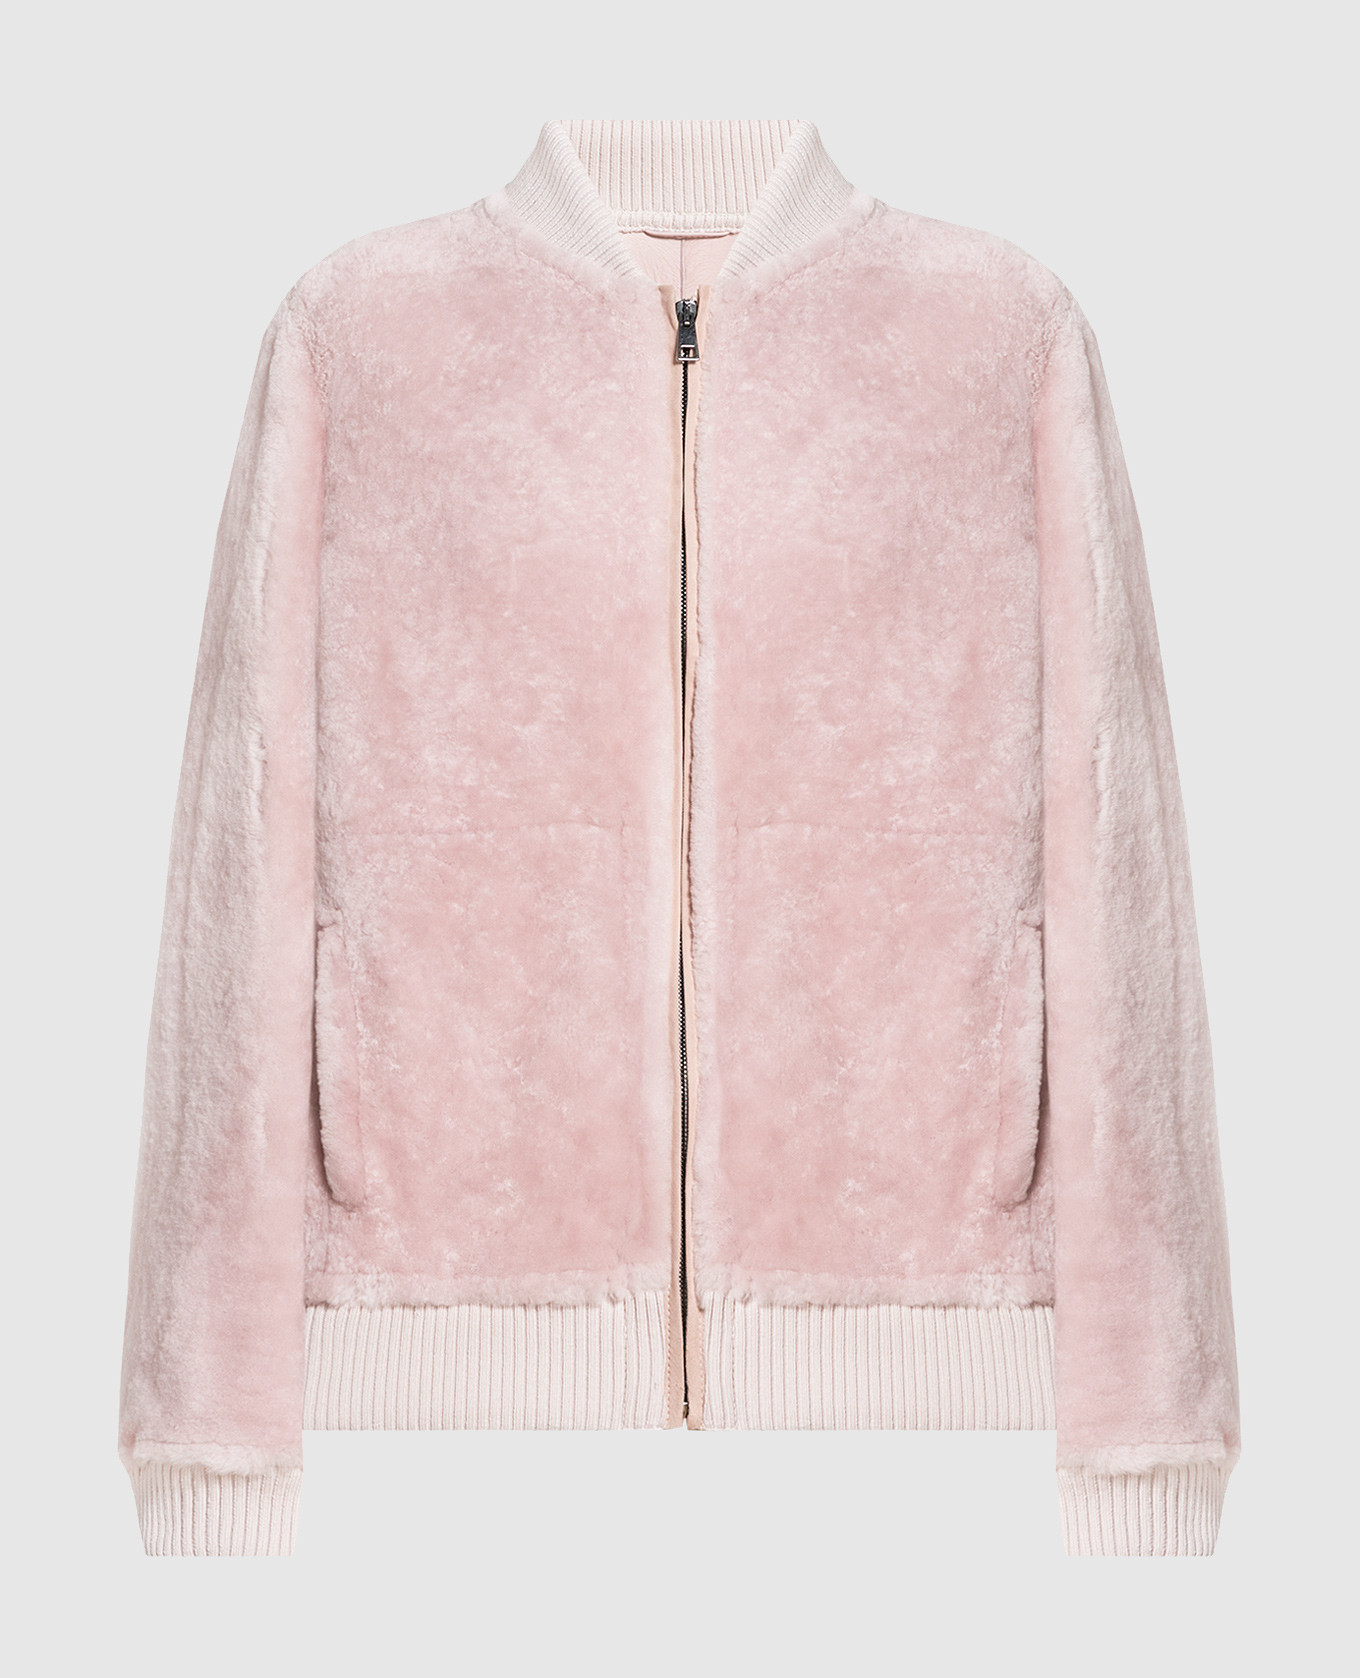 Irvin pink shearling bomber jacket